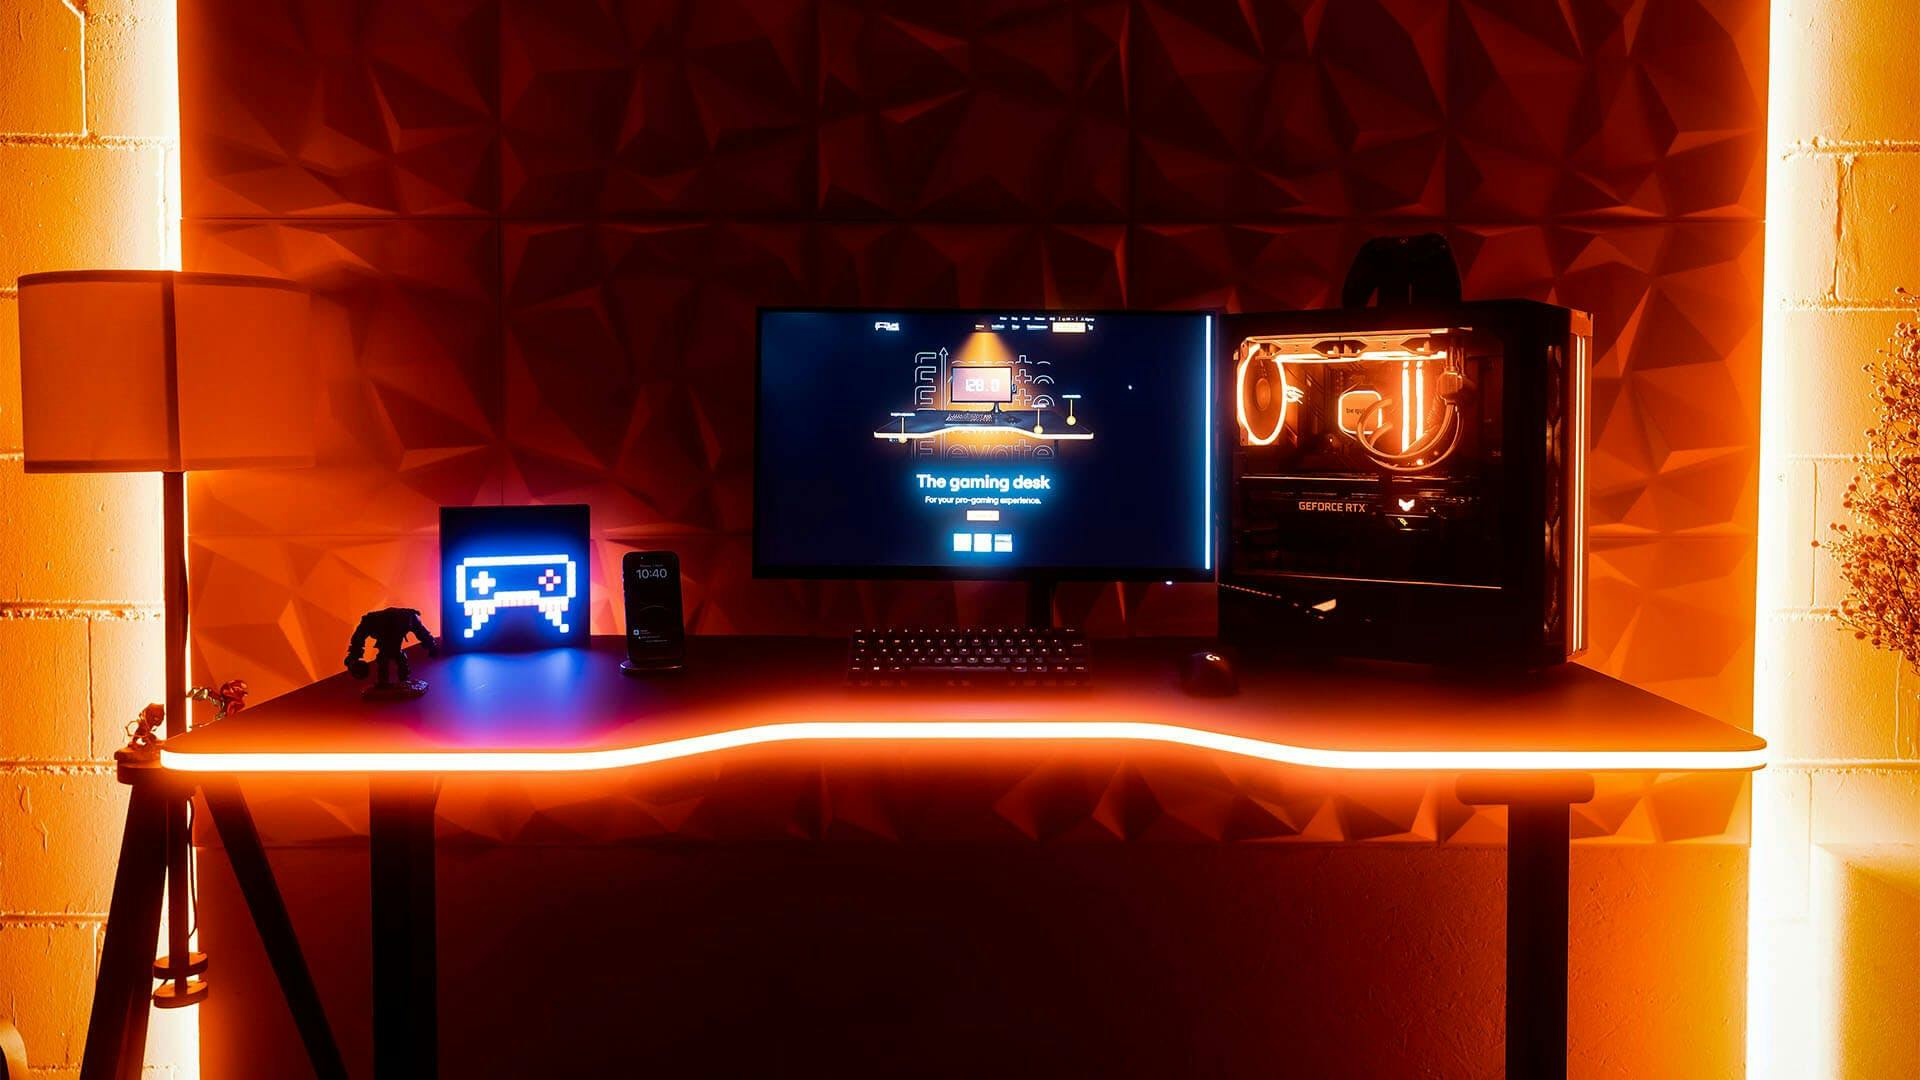 ein rgb gaming setup mit einem led gaming desk und rgb hardware